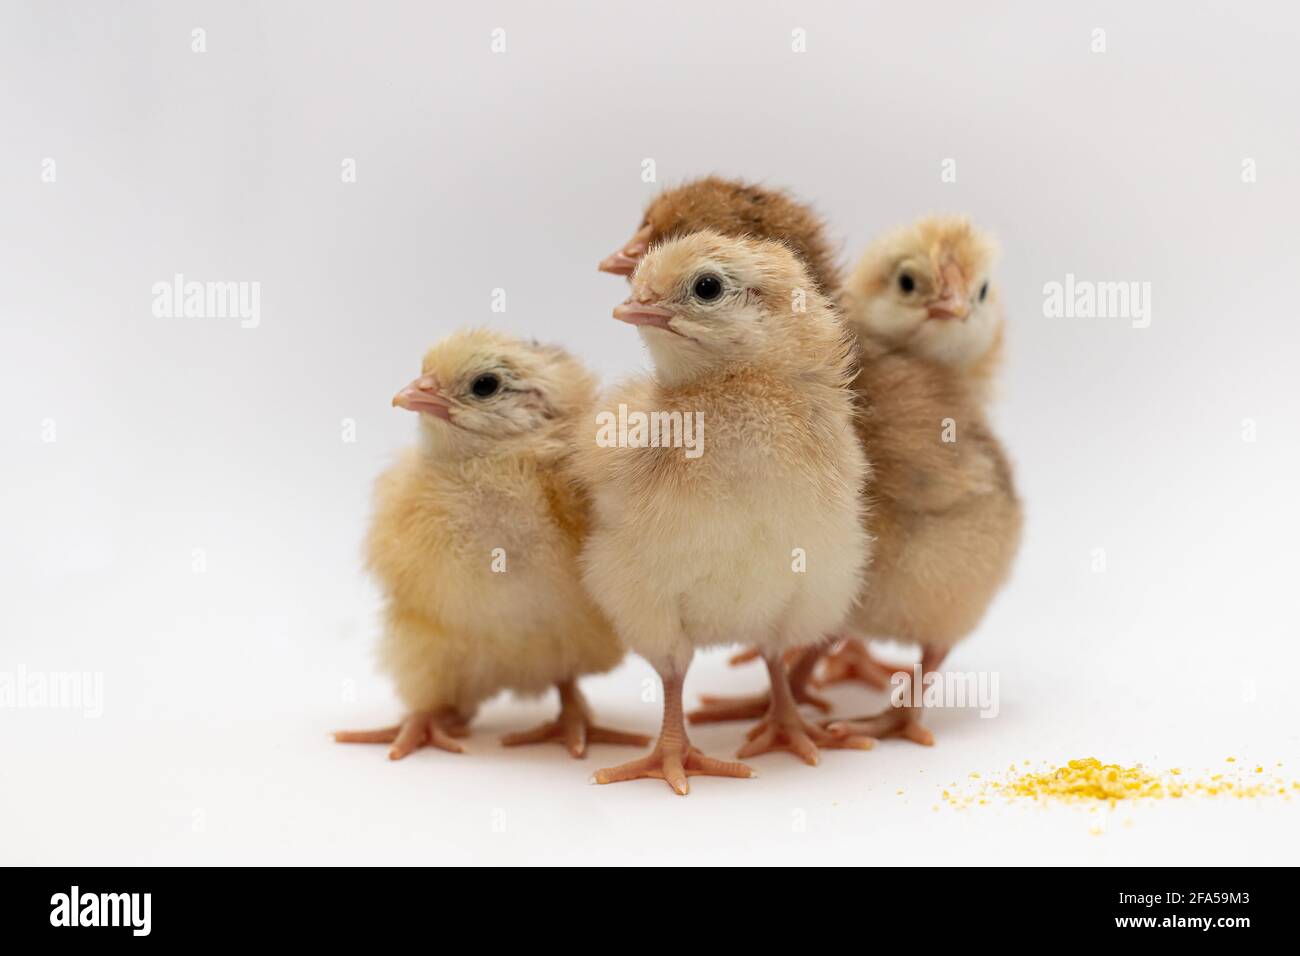 Four newborn chicks isolated on white background Stock Photo